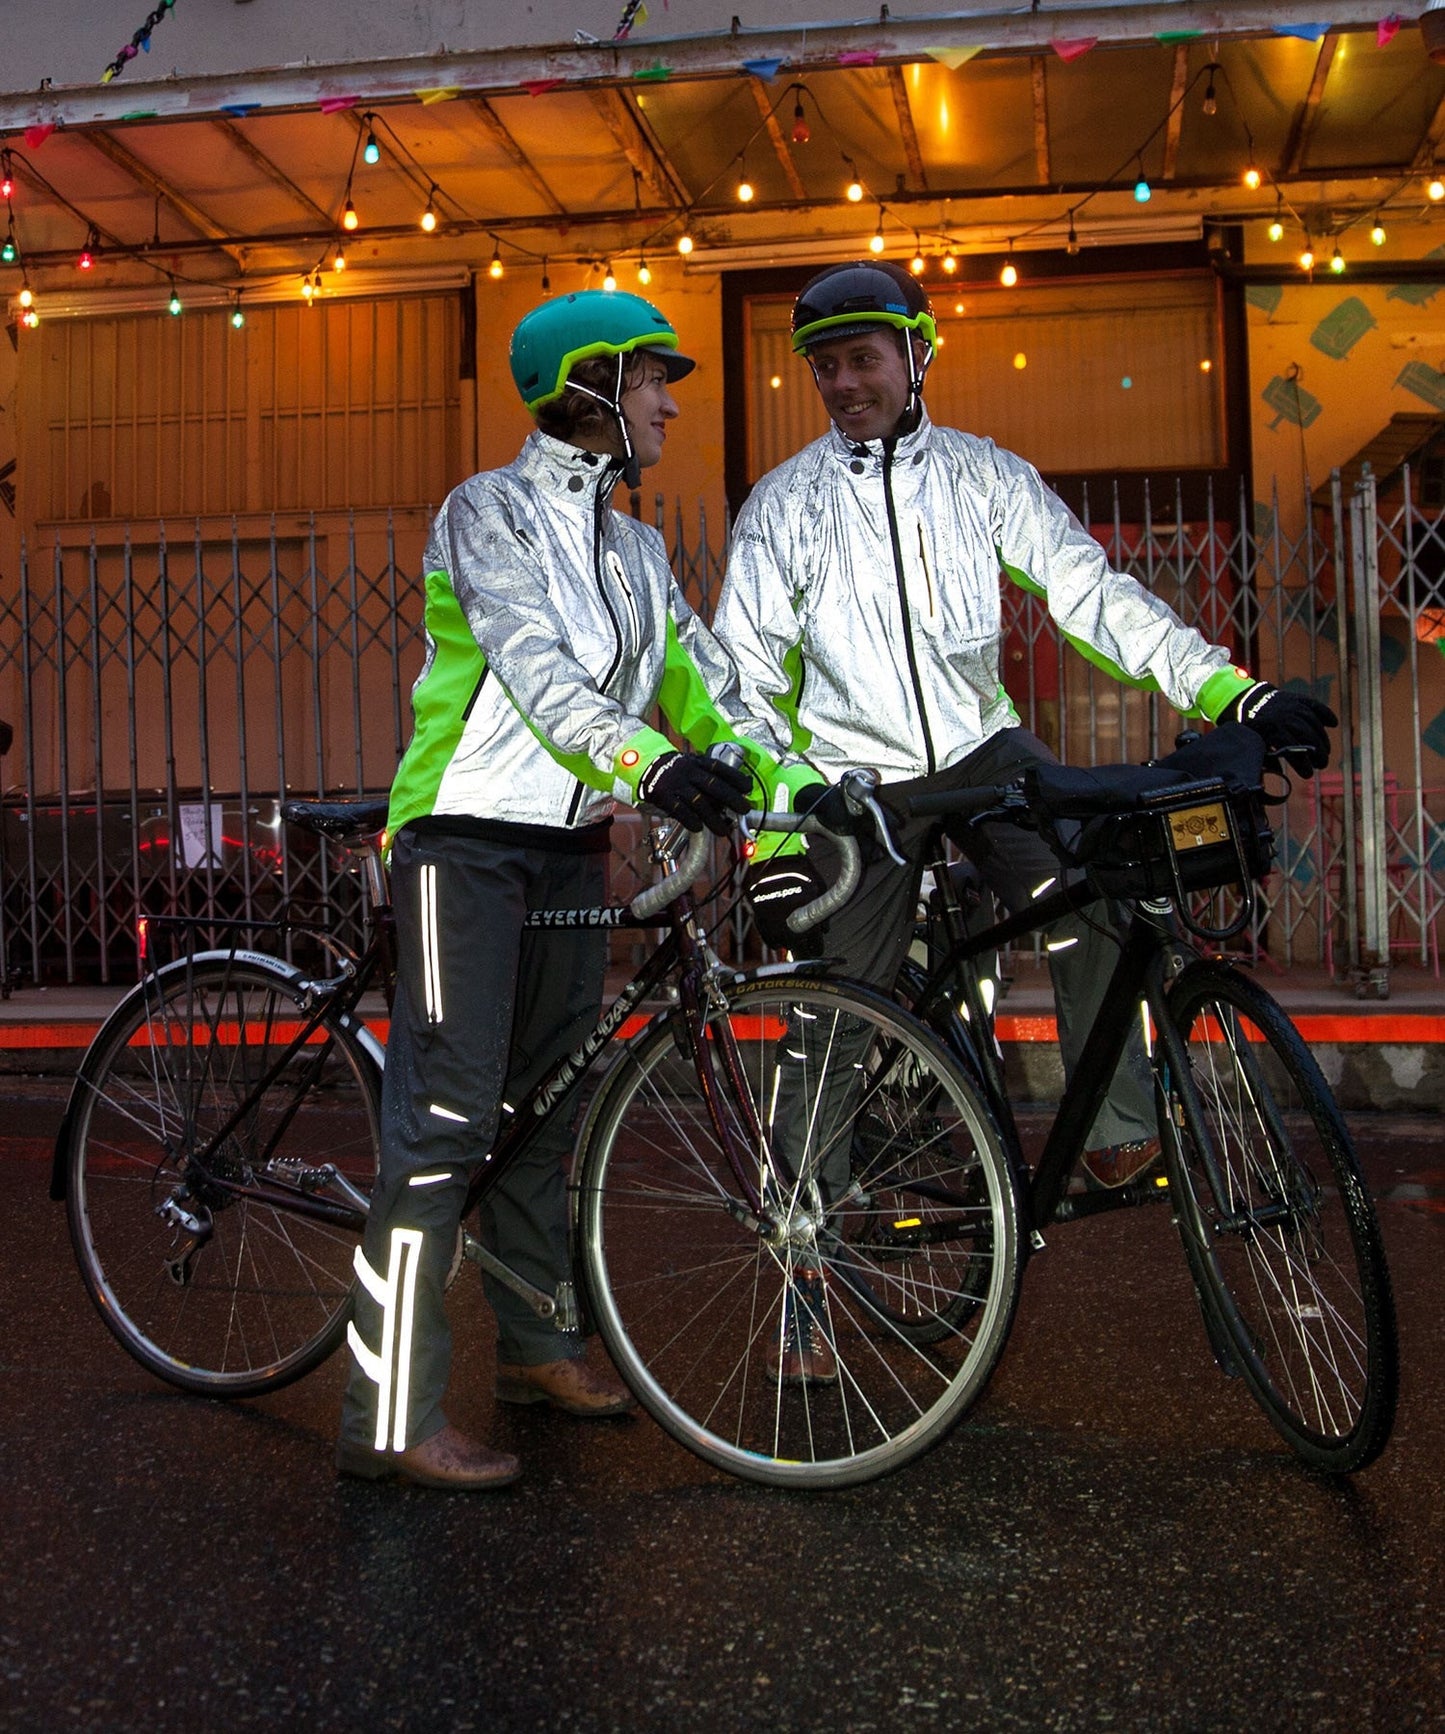 Men's Hi-Vis Torch E-Bike Jacket with Beacon Lights